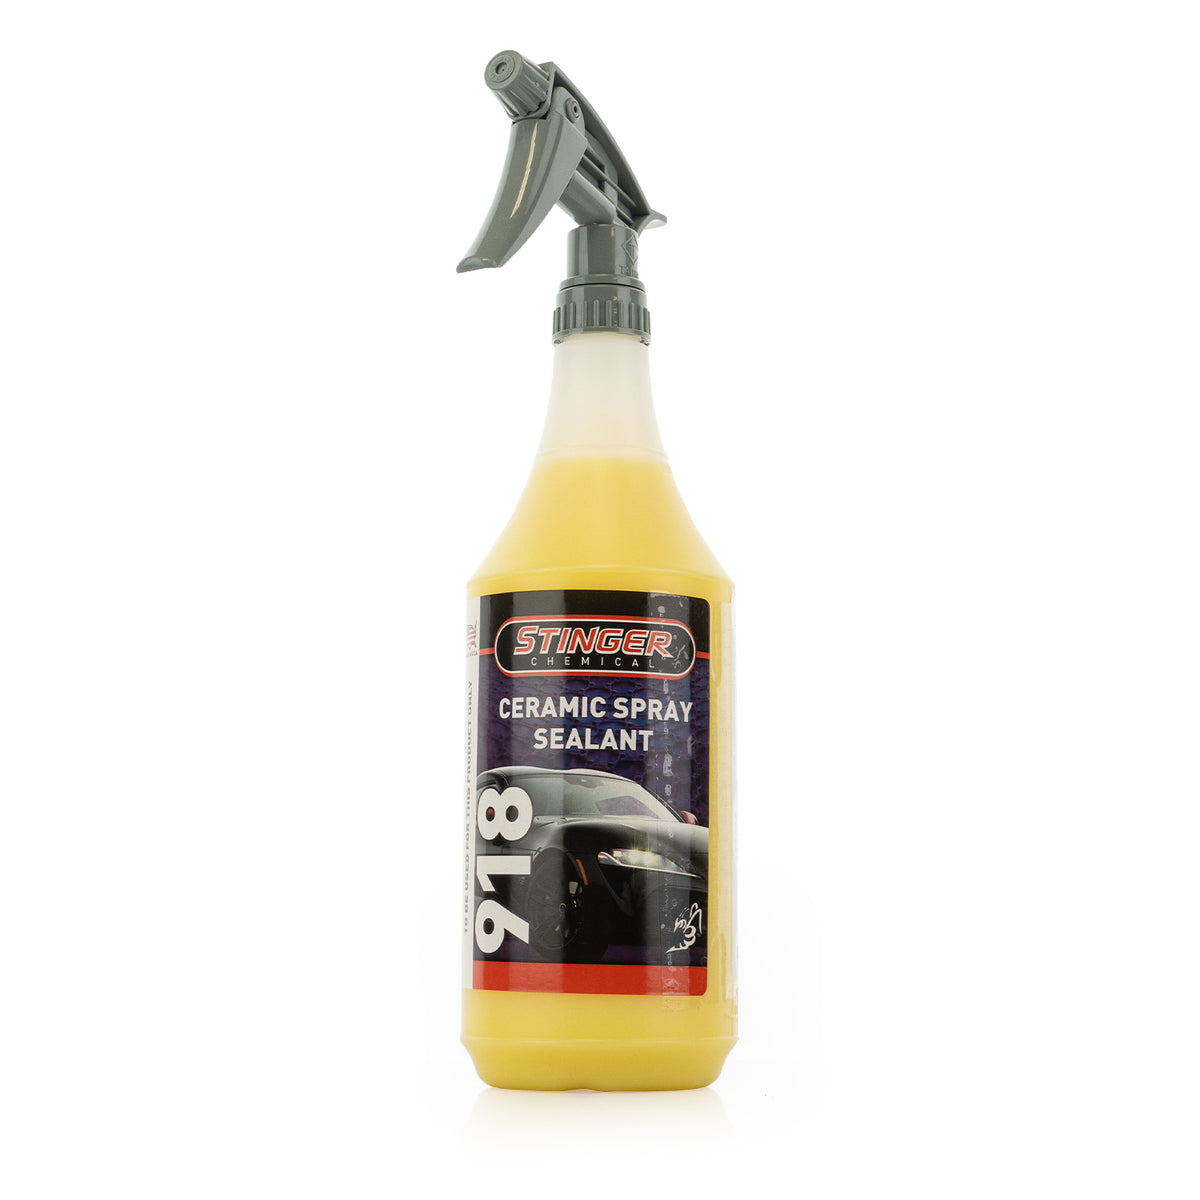 750ML Car Washing Spray Atomization Bottle Durable Acid Resistant